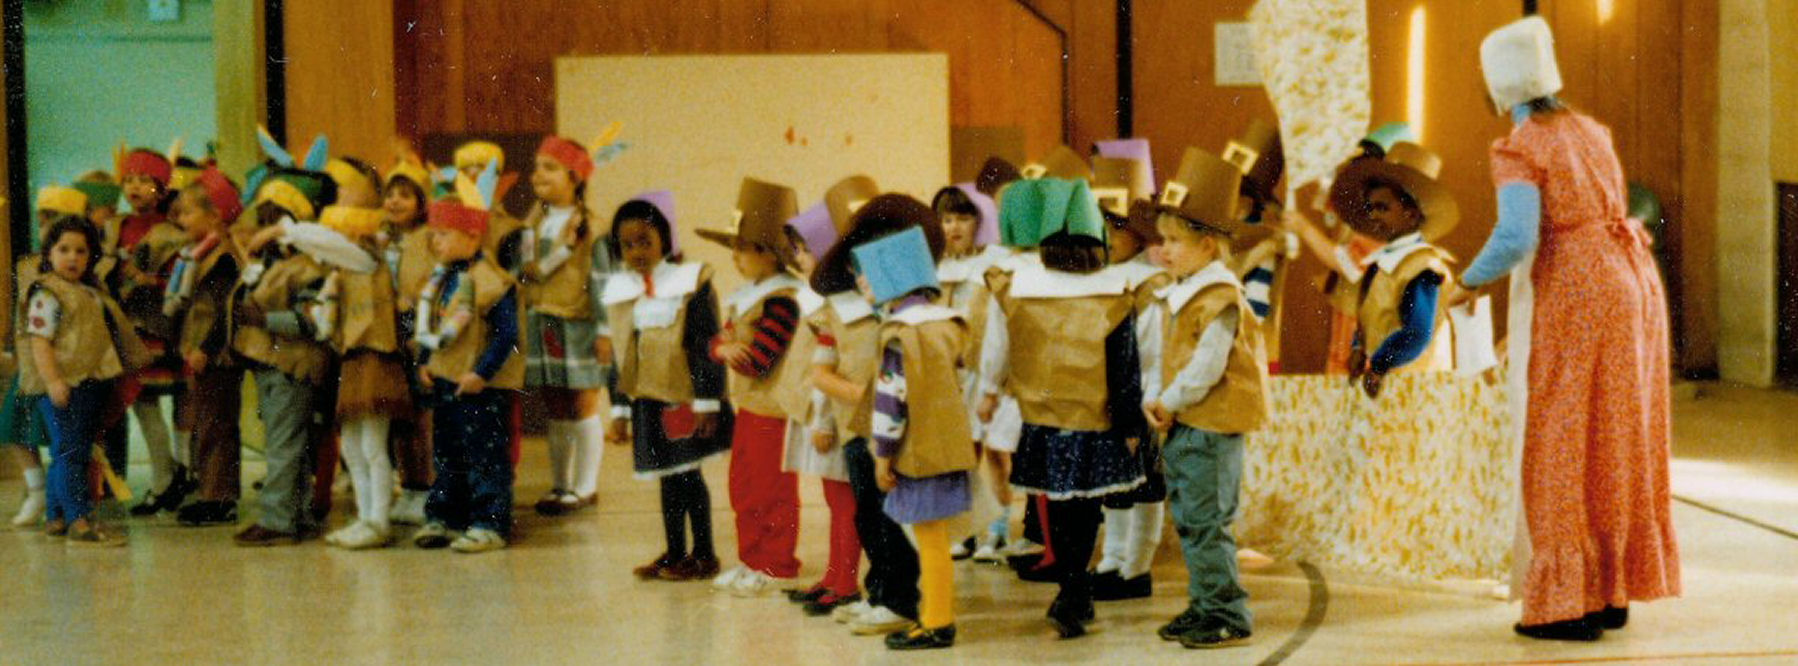 My Kindergarten class dressed for a Thanksgiving Feast.